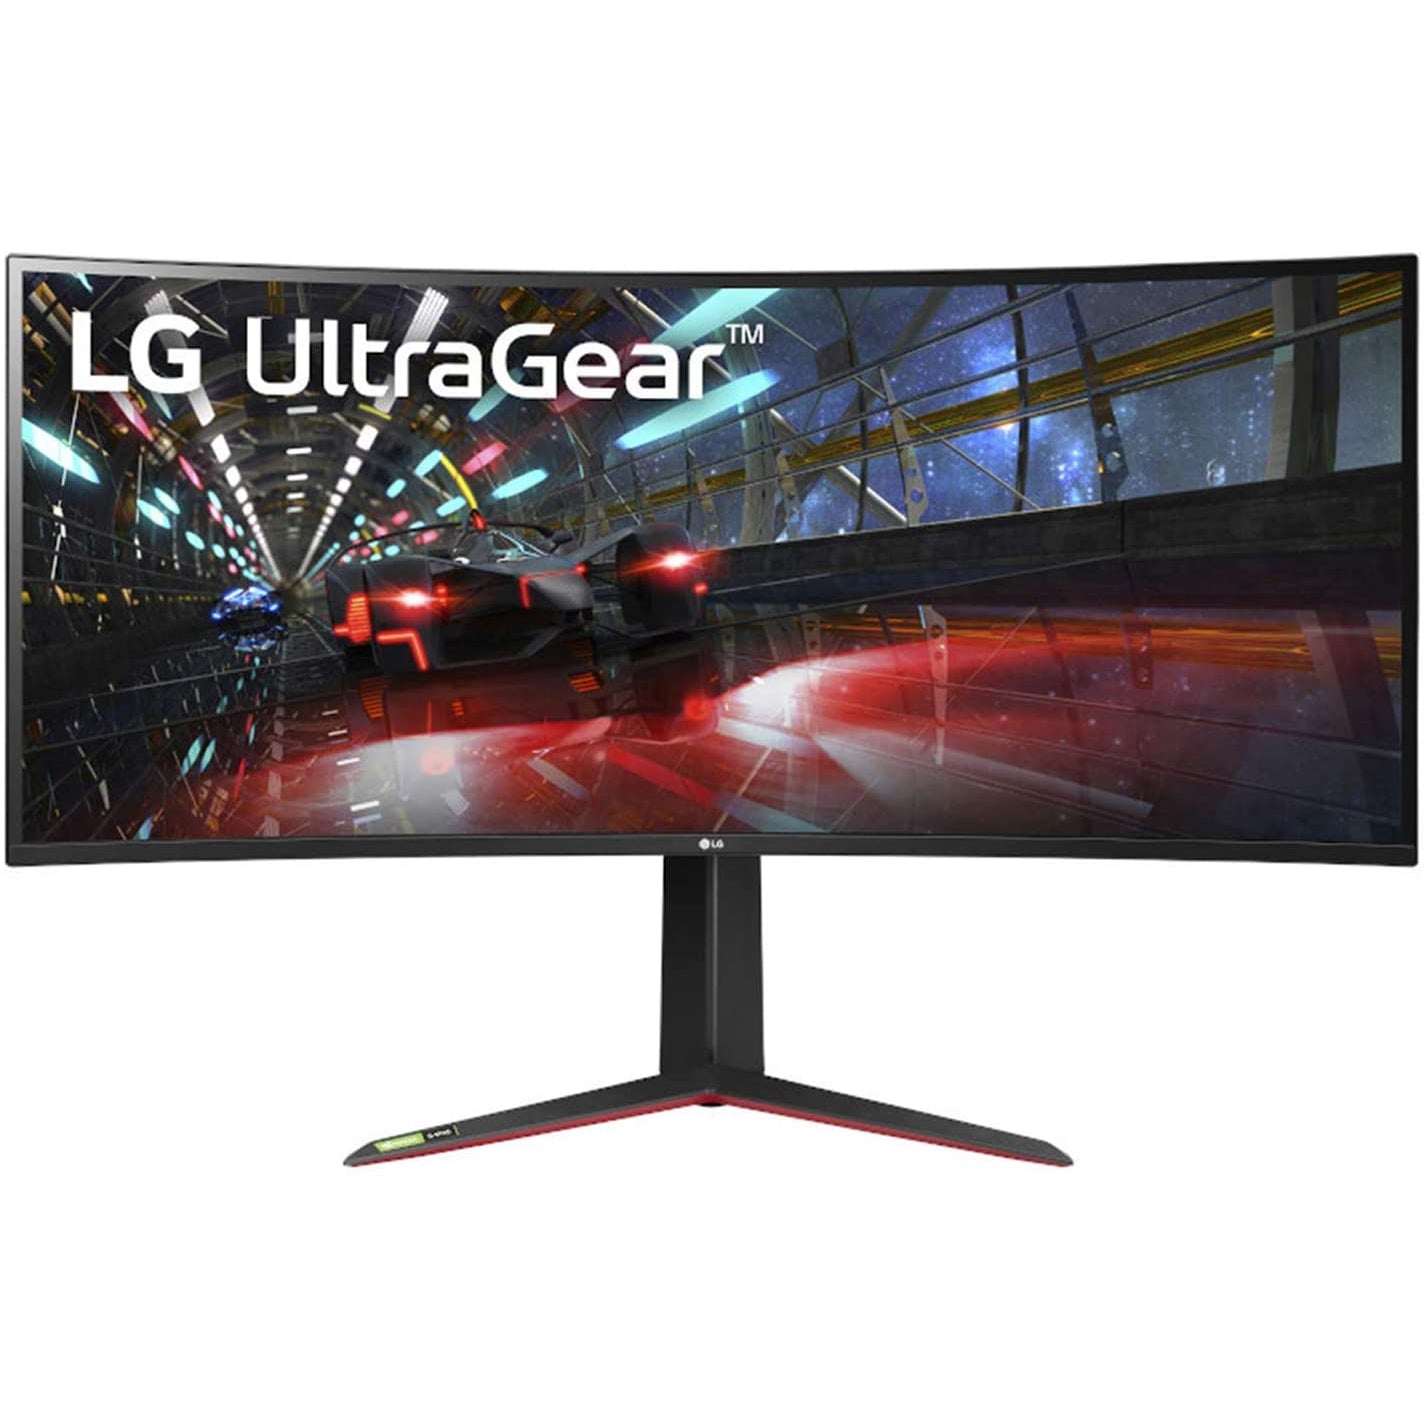 LG UltraWide Monitor 38GN950-B - 37.5 inch, IPS Monitor, 160 Hz, 1 ms, 21:9, 3840X1600 px, G-Sync, Black